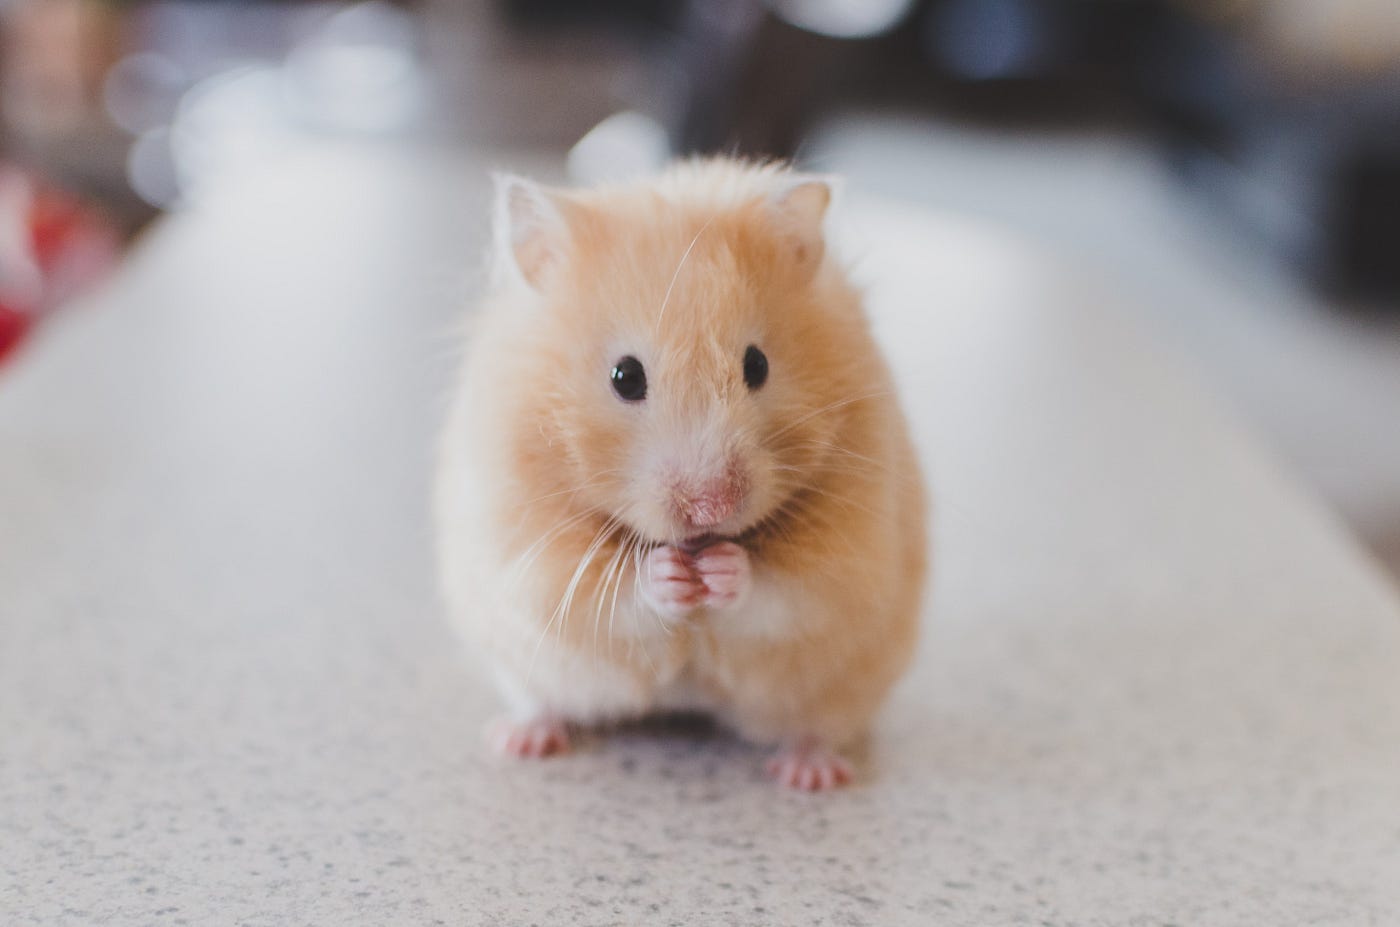 The Hamster Infestation photo